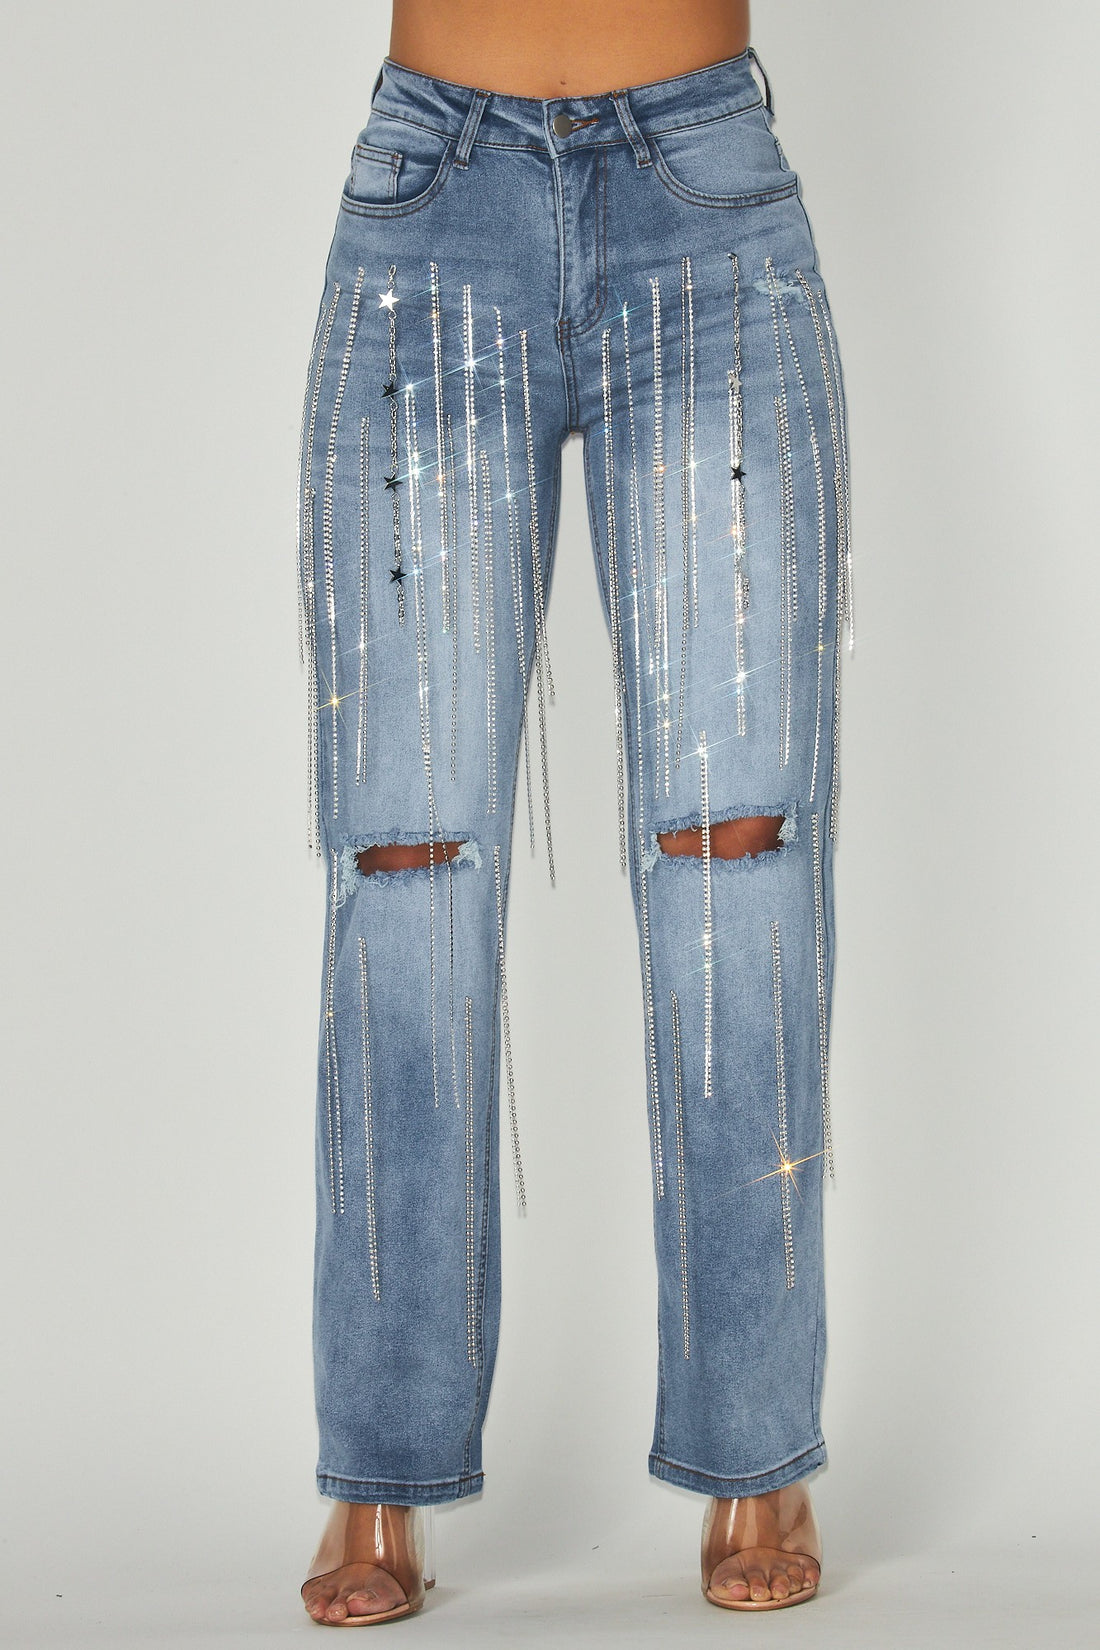 Rhinestone Chain Denim Jeans